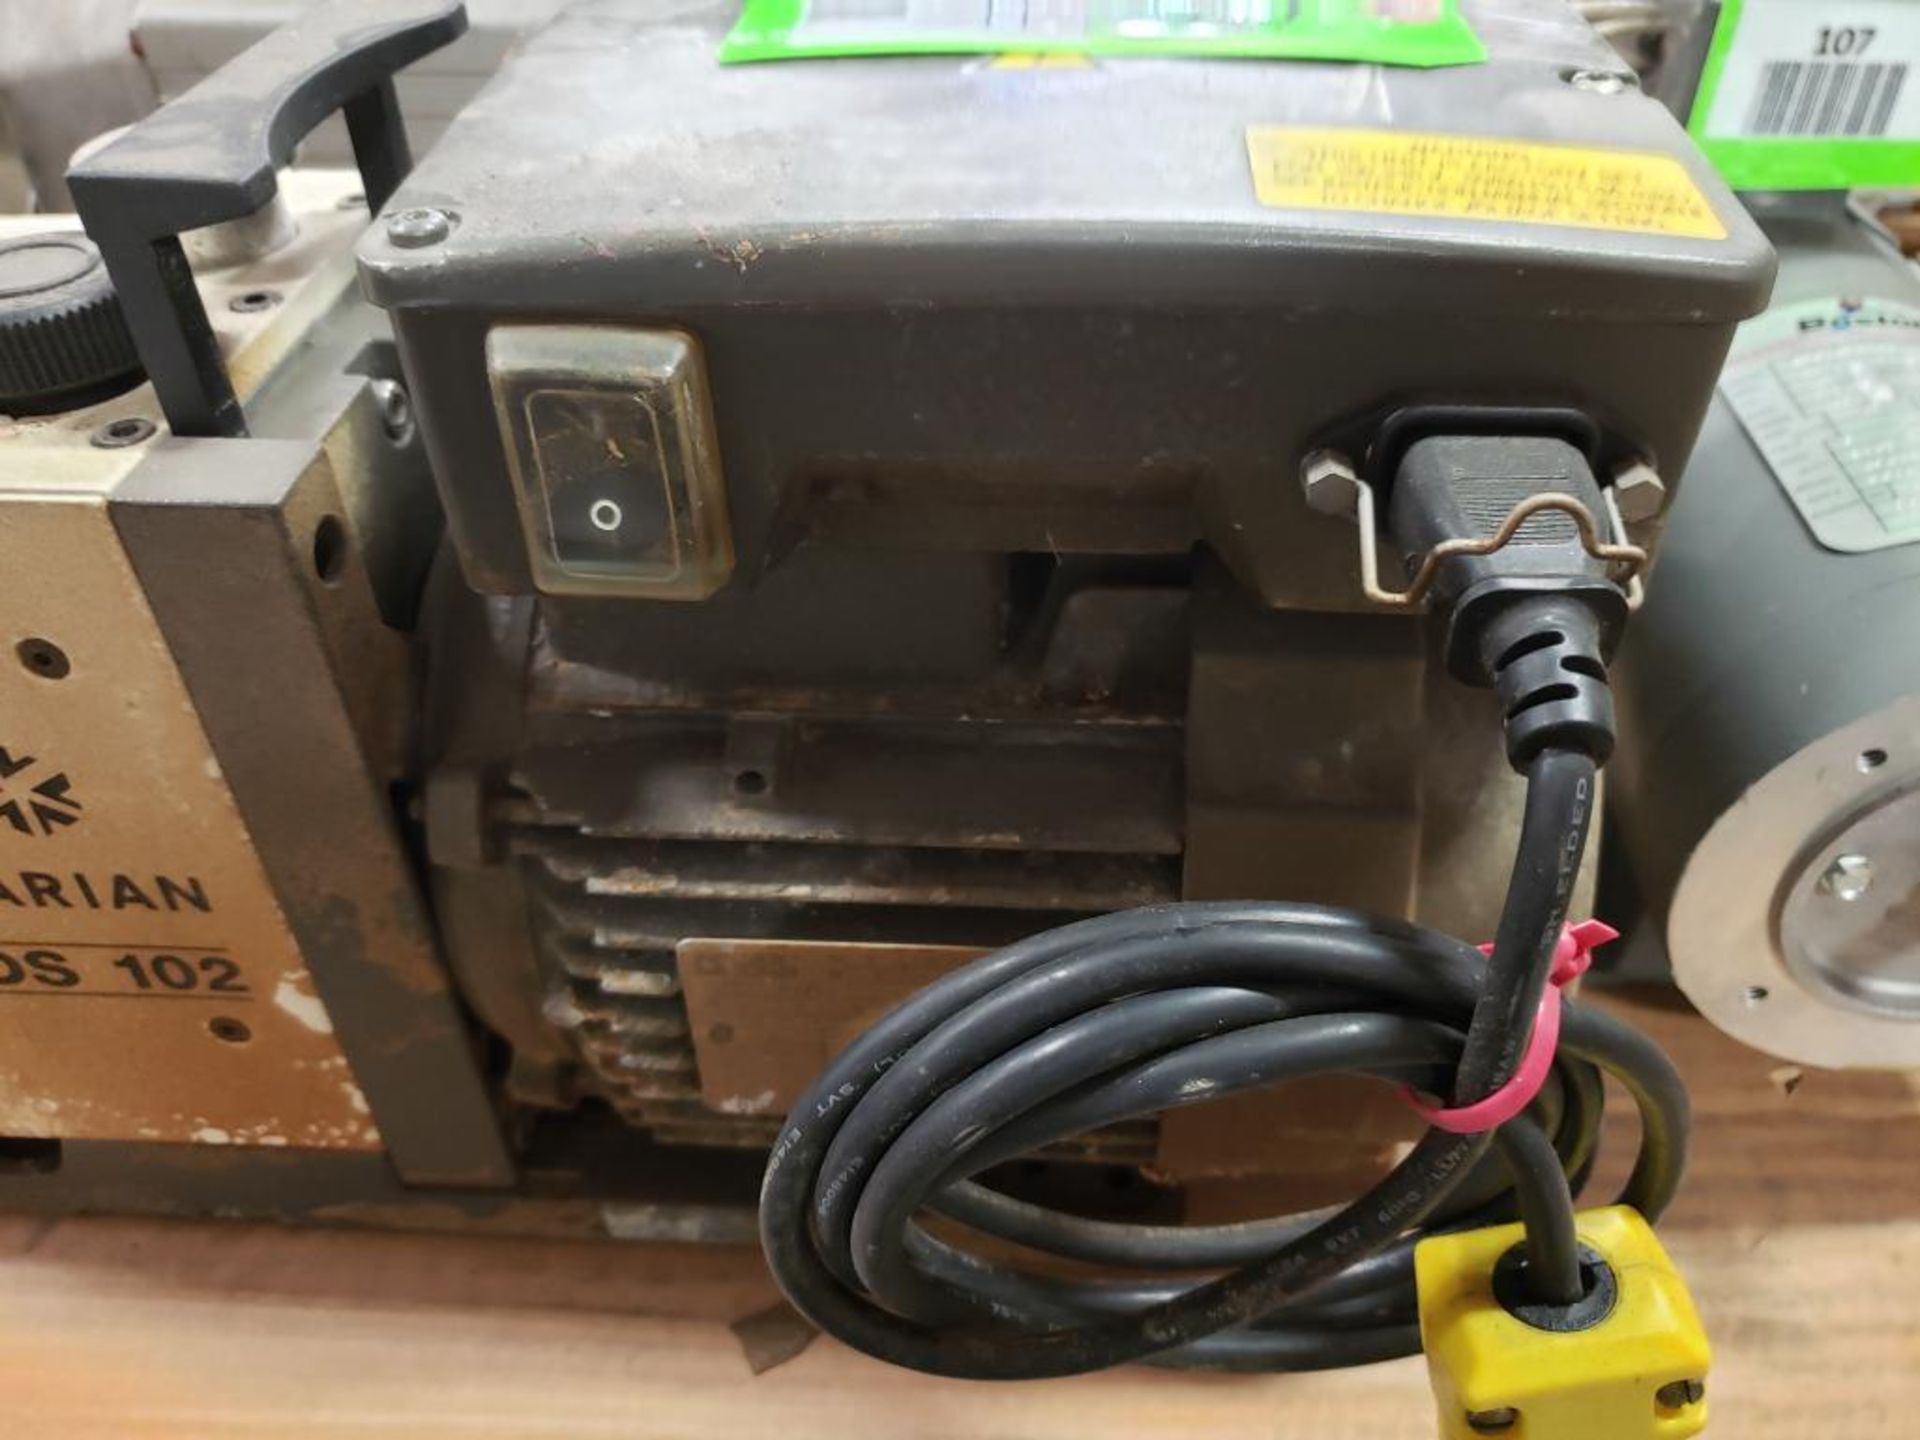 Varian DS102 vacuum pump. 949-9315. Leroy Somer 1PH motor. - Image 3 of 7